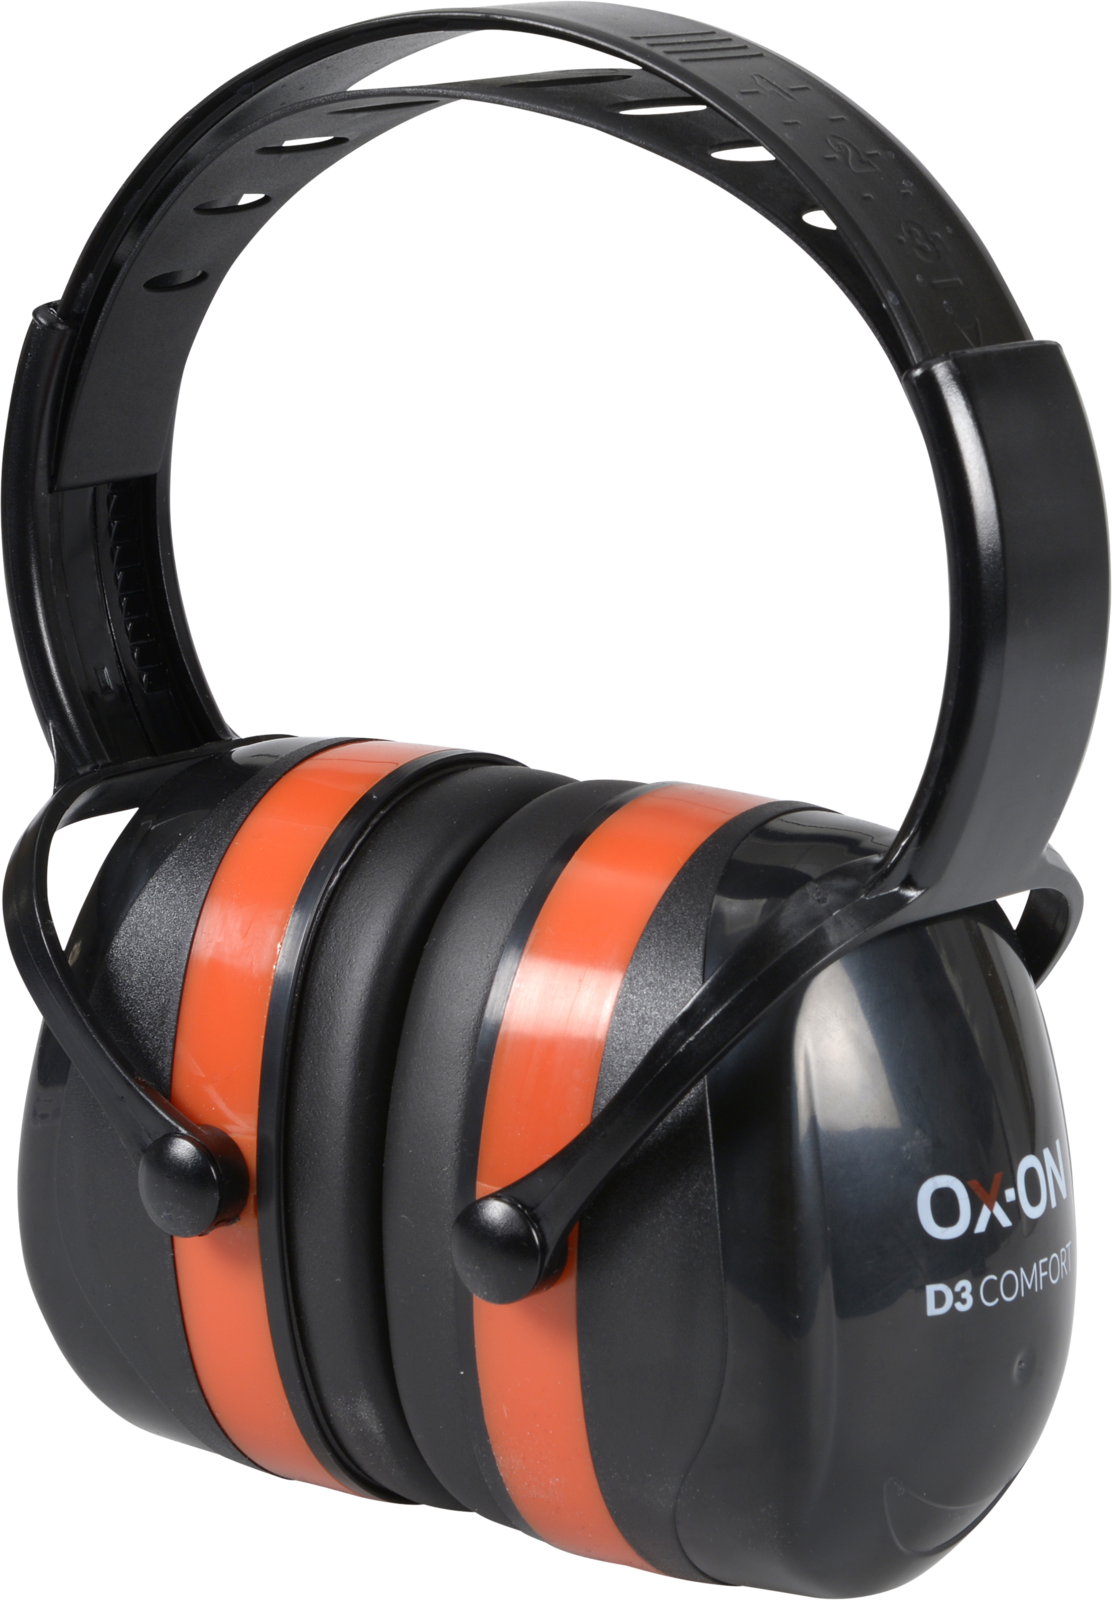 OX-ON Earmuffs D3 Comfort 331.42